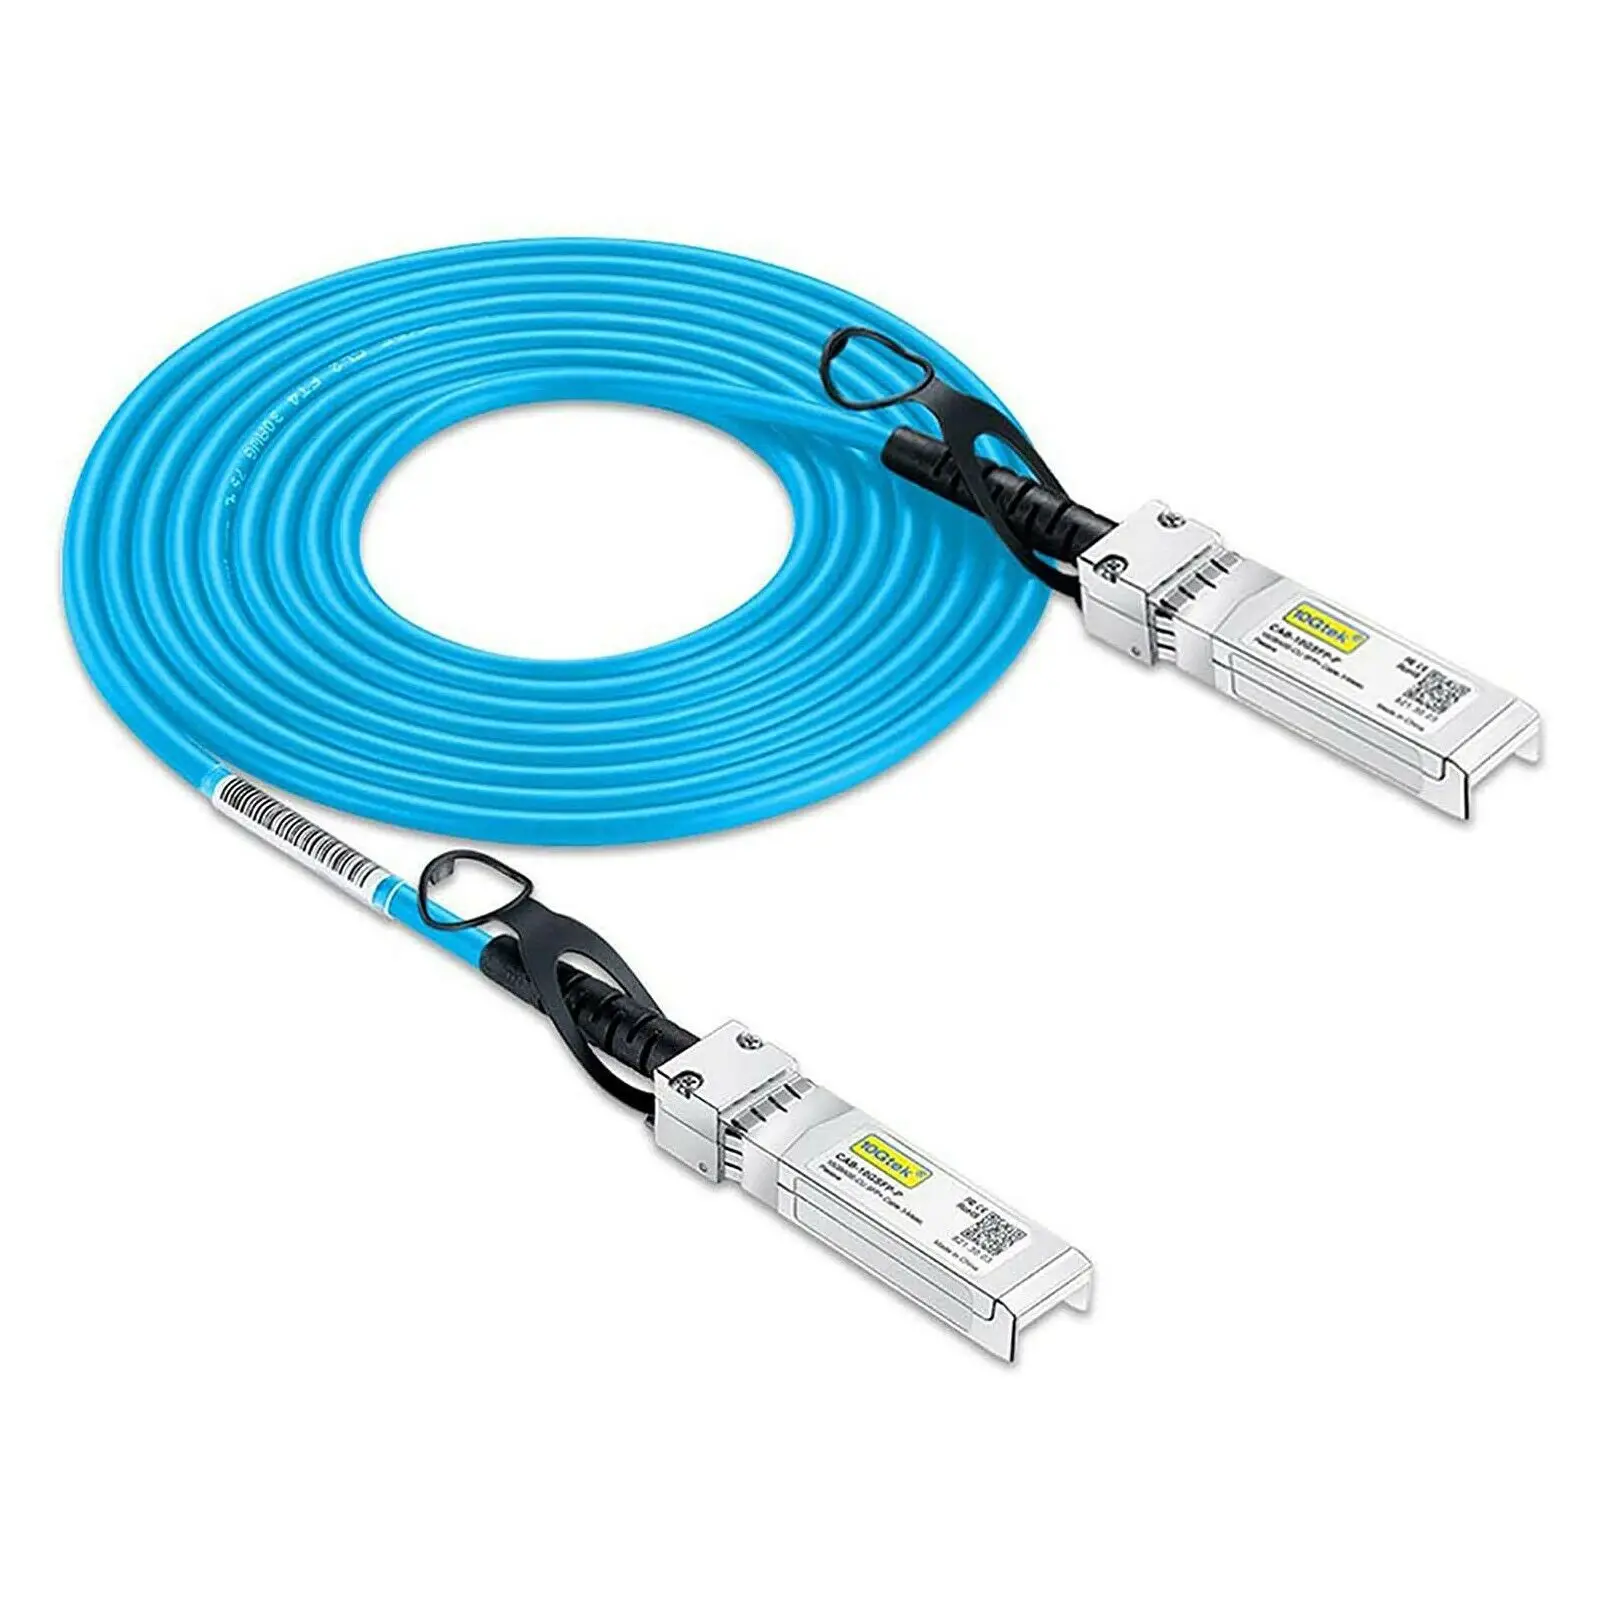 [Blue] Colored 10G SFP+ DAC Cable - Twinax SFP Cable for Cisco SFP-H10GB-CU1M, Arista, Ubiquiti,D-Link, Netgear,1-Meter(3.3ft) кружка esprado arista blue 350мл костяной фарфор